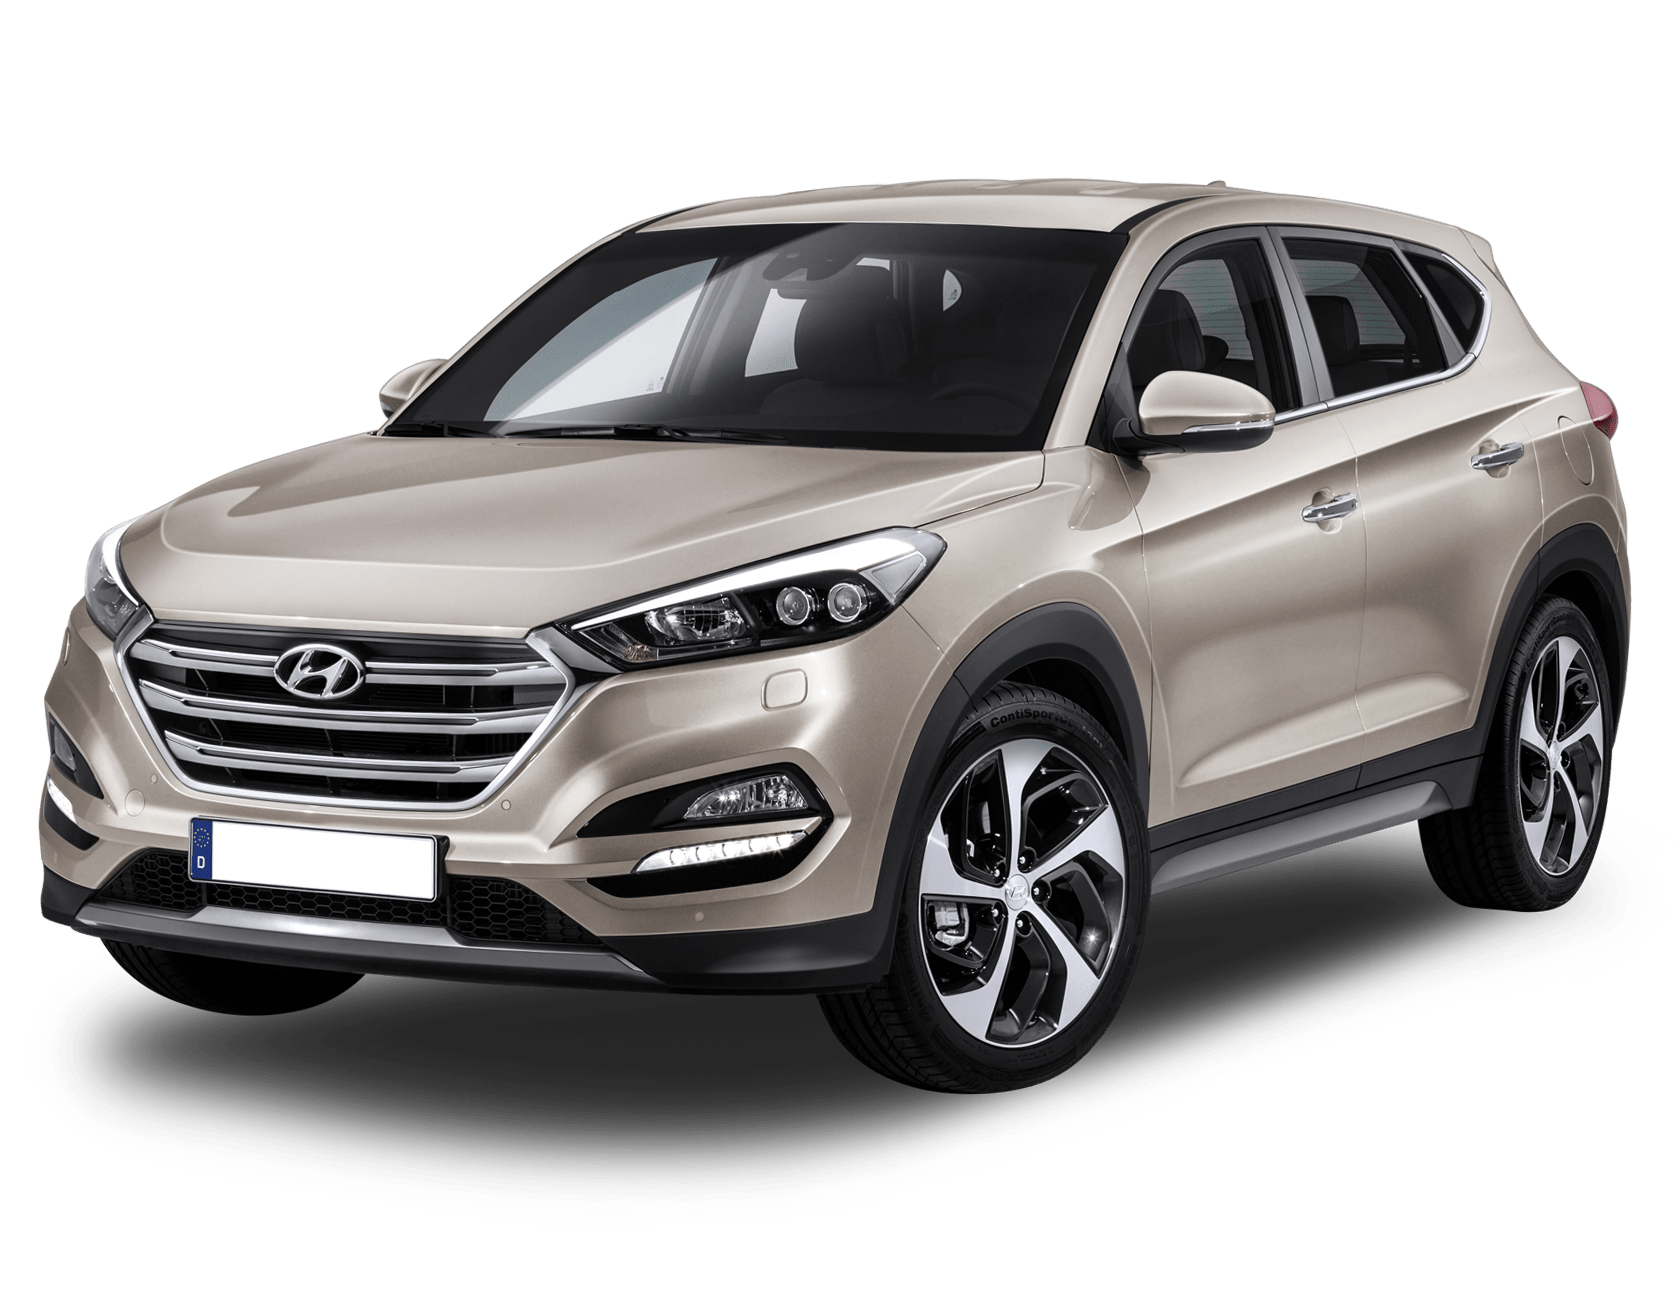 2017 Hyundai Tucson 20 MPi Premium 4WD for RM159888  CarSifu